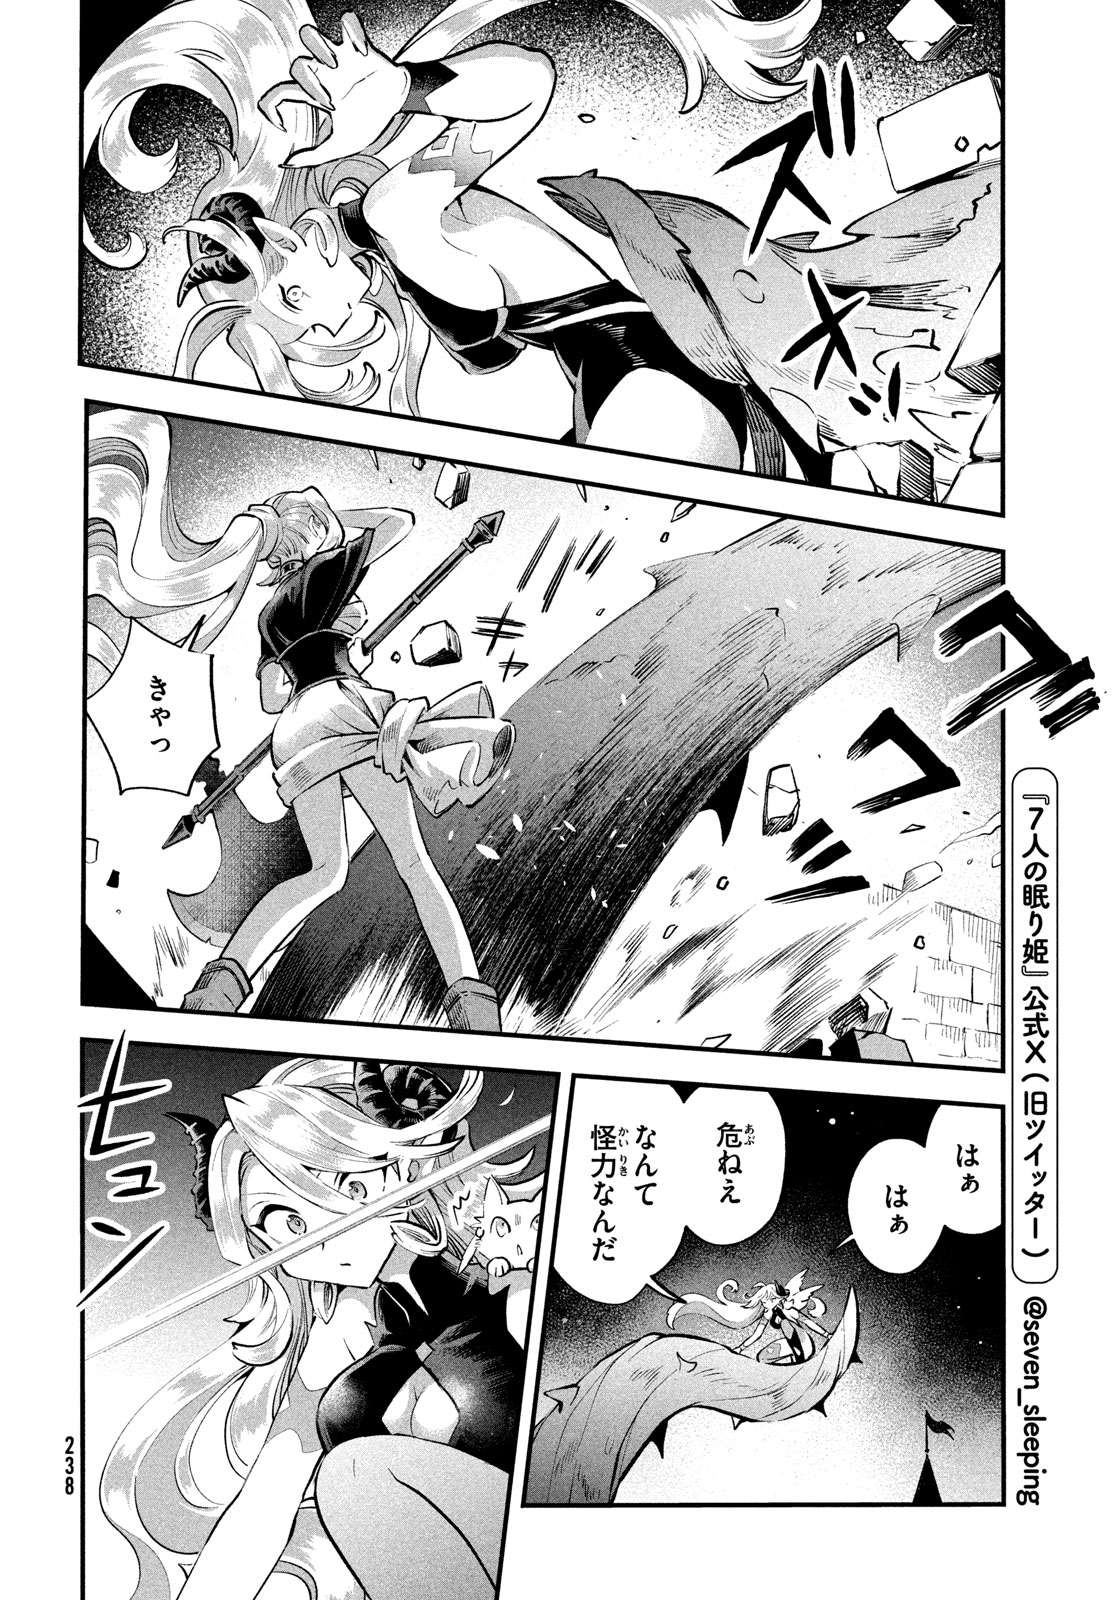 7-nin no Nemuri Hime - Chapter 46 - Page 12